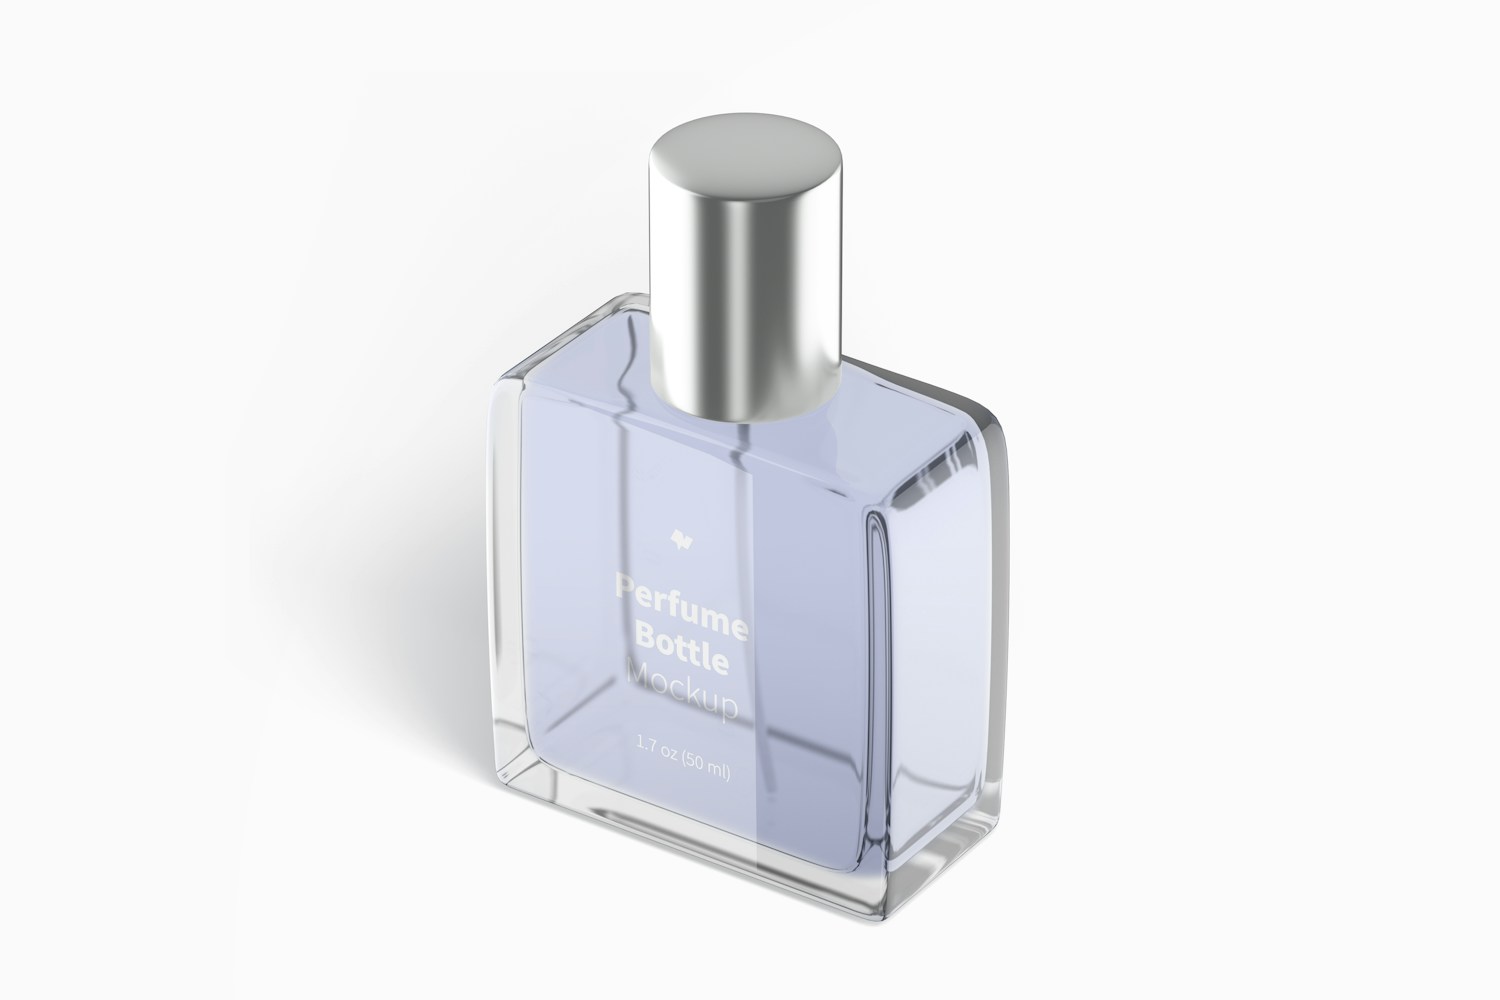 Perfume Bottle Mockup, Isometric Right View